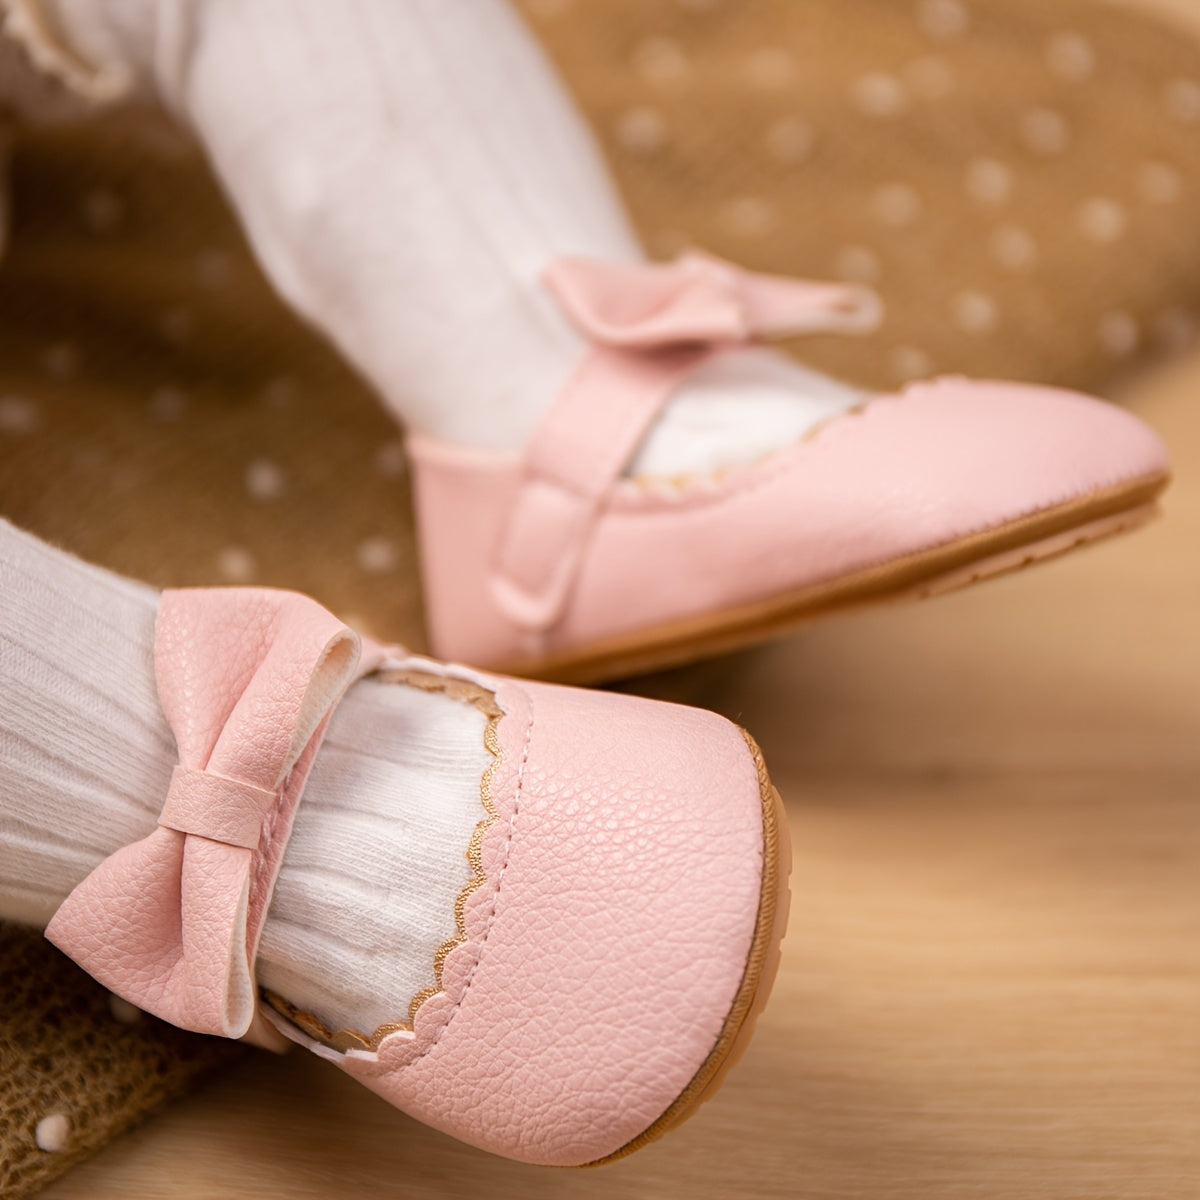 Infant Baby Girls Soft Sole Anti Slip Princess Dress Shoes